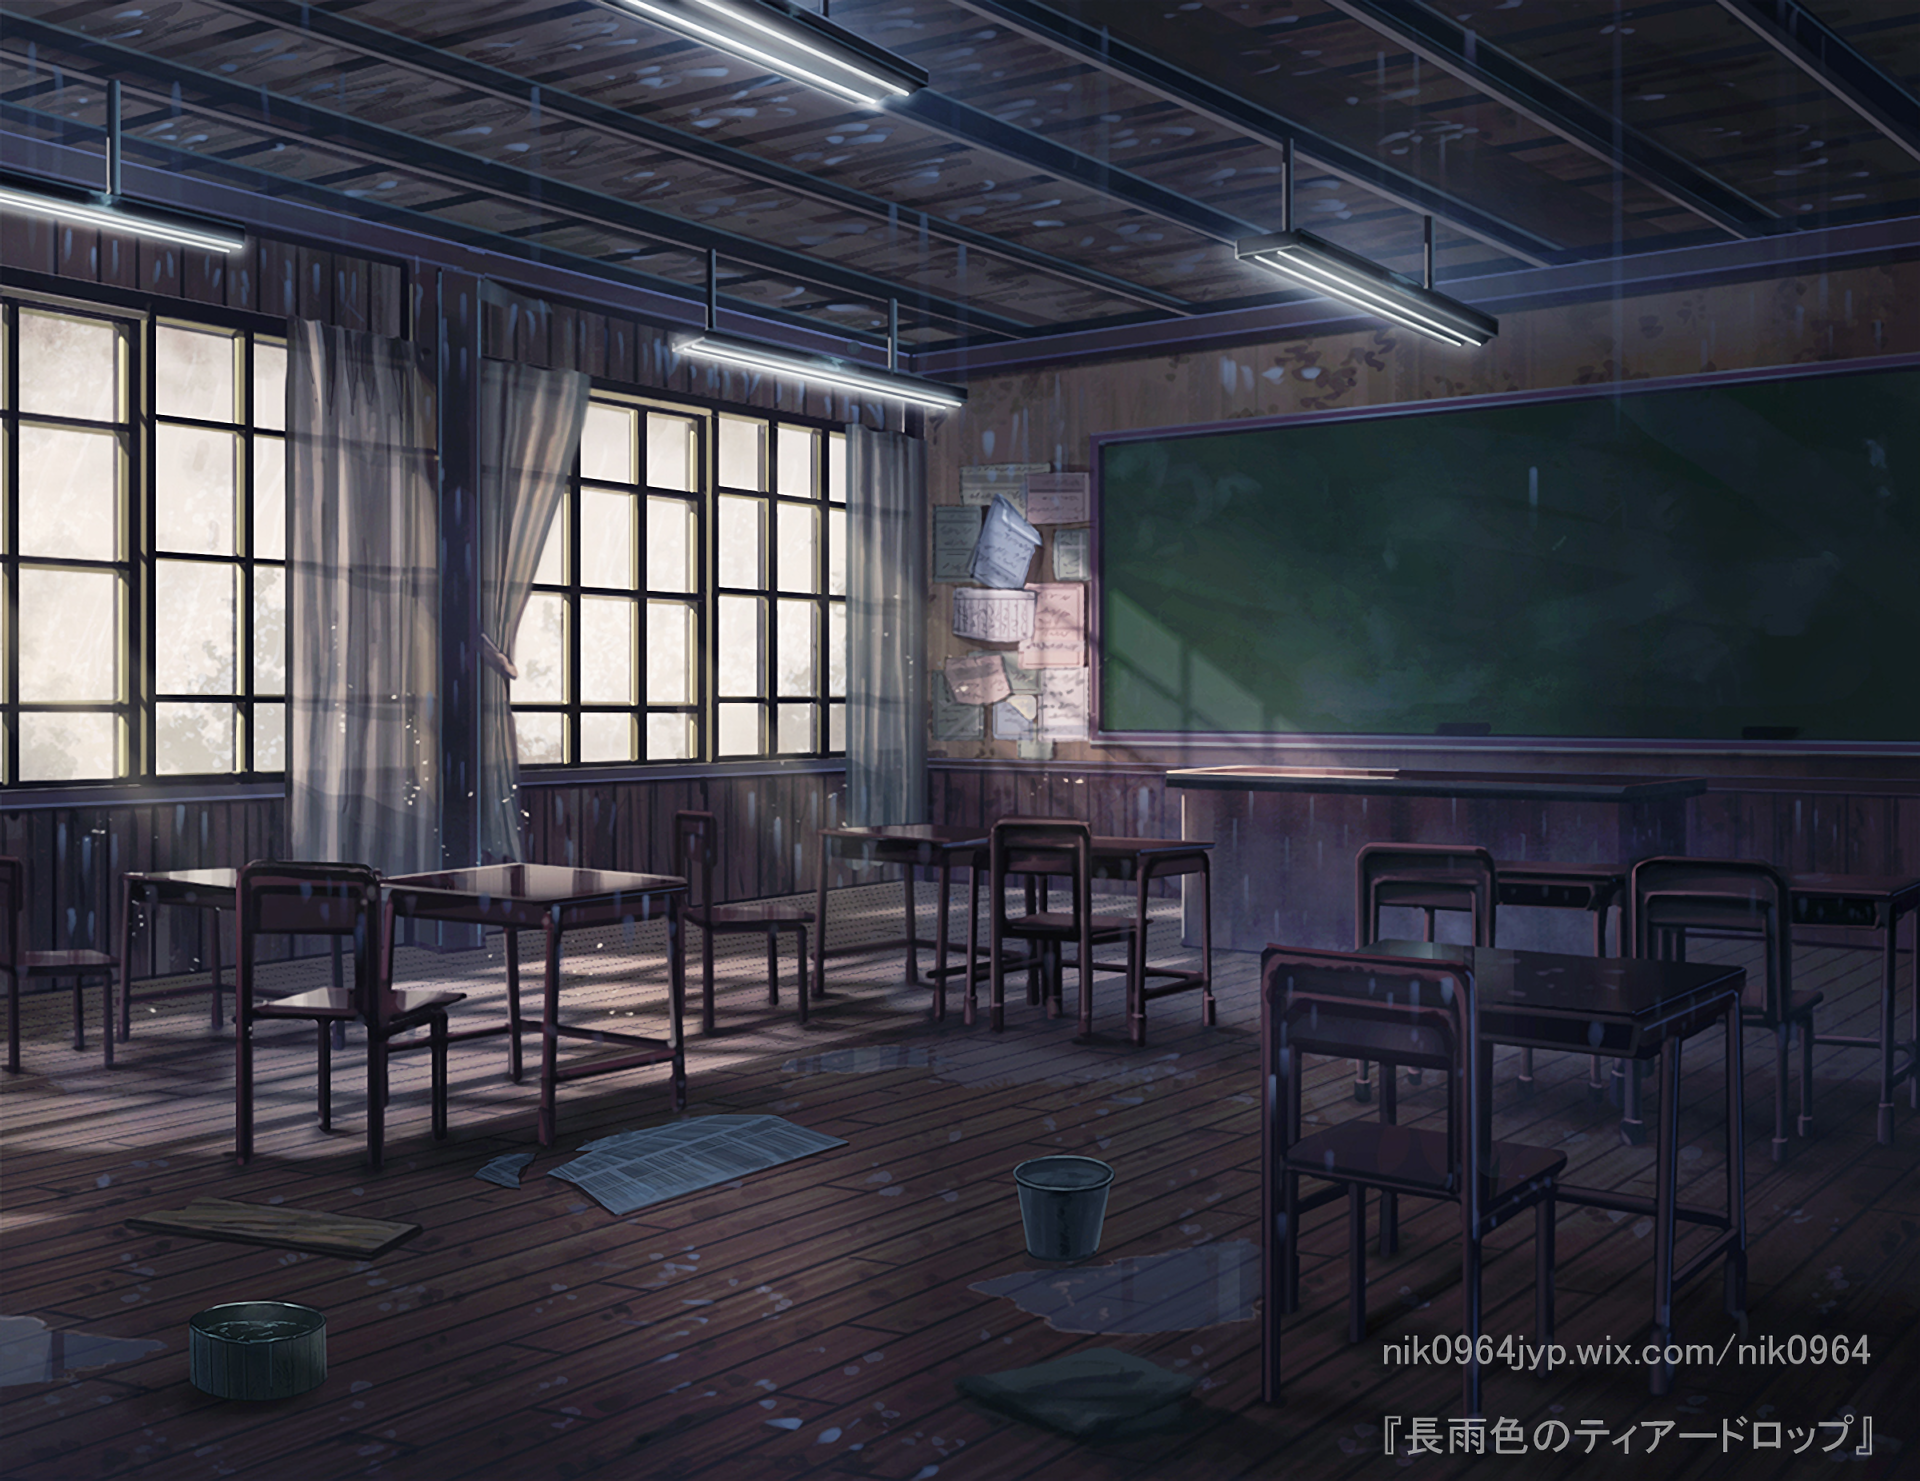 Anime Classroom HD Wallpaper by NIK